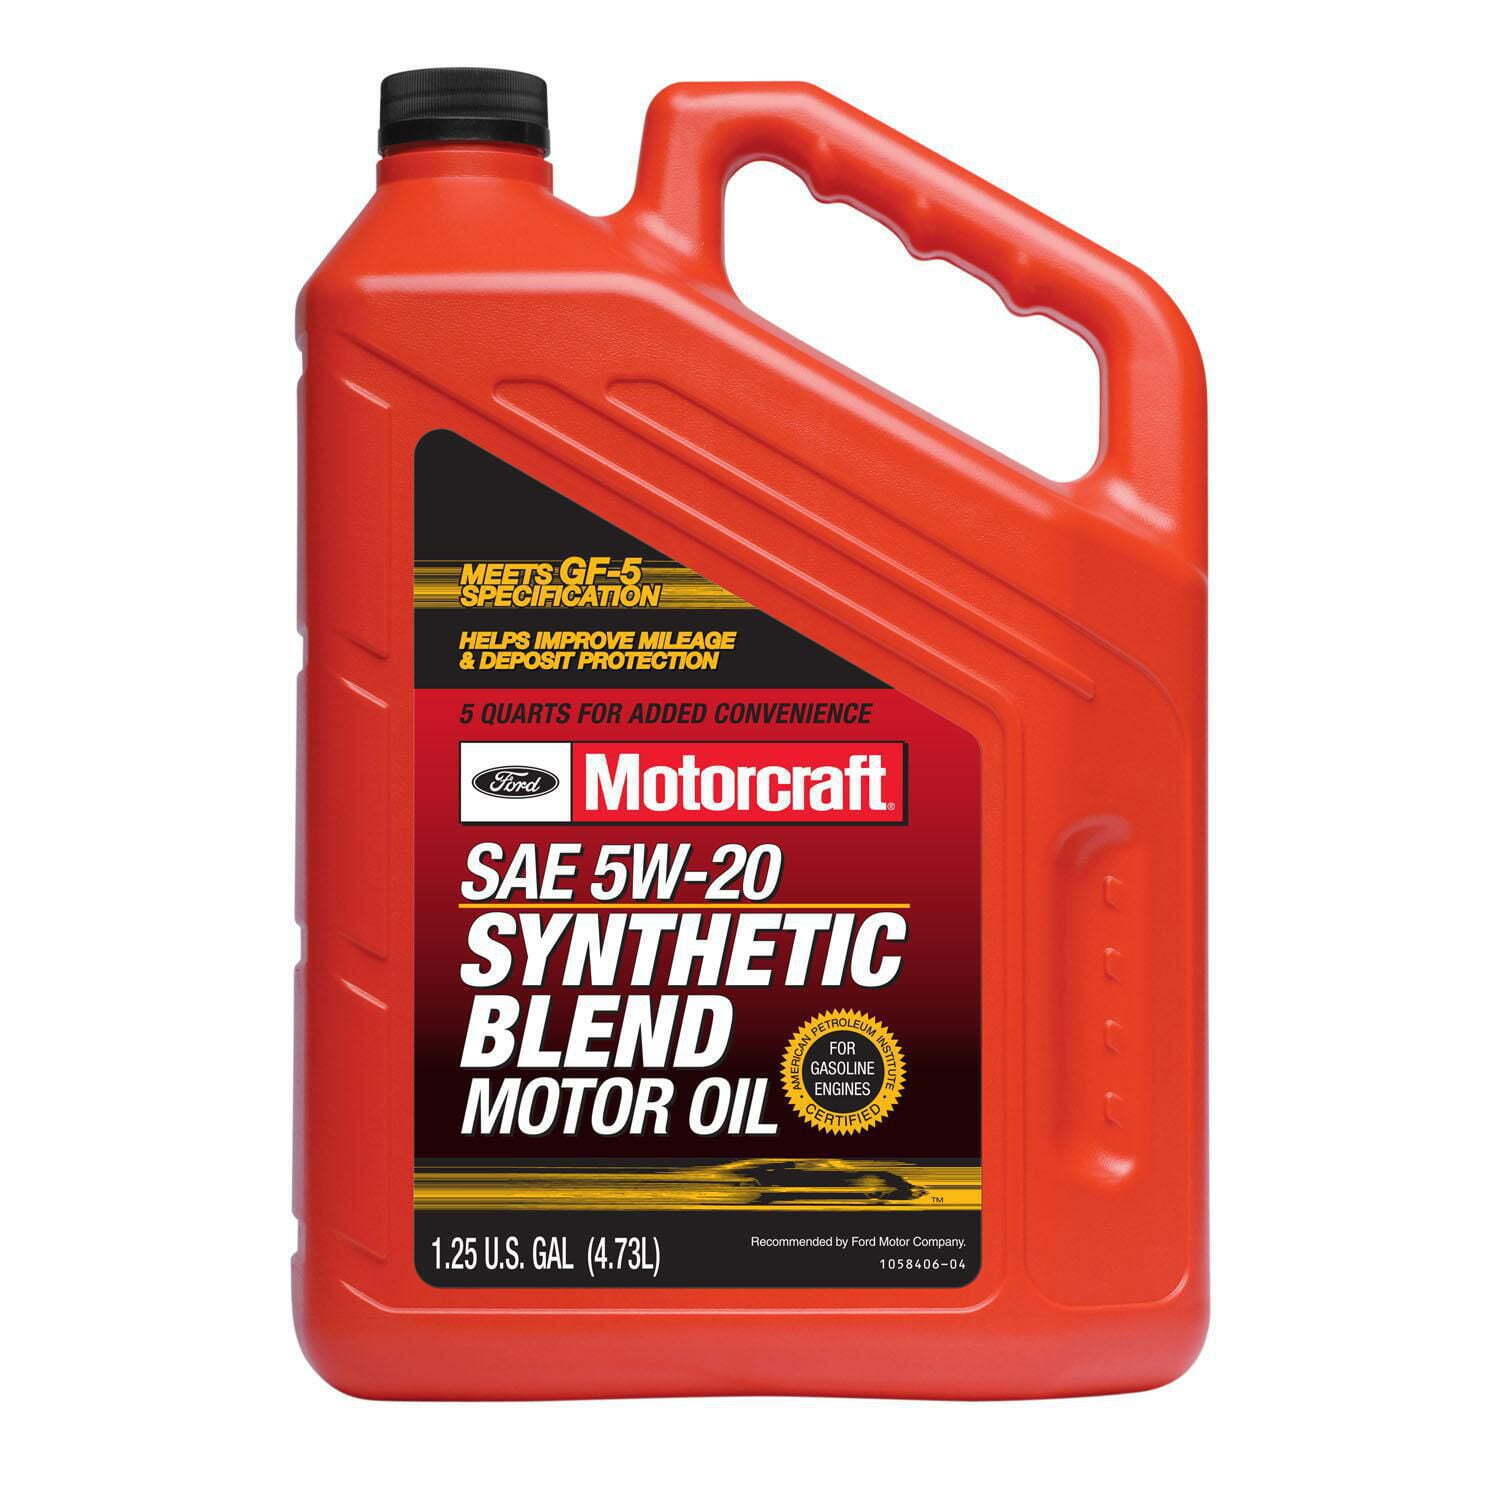 Synthetic Blend Motor Oil, 5W-20 - A premium-quality motor oil, 5 quart jug